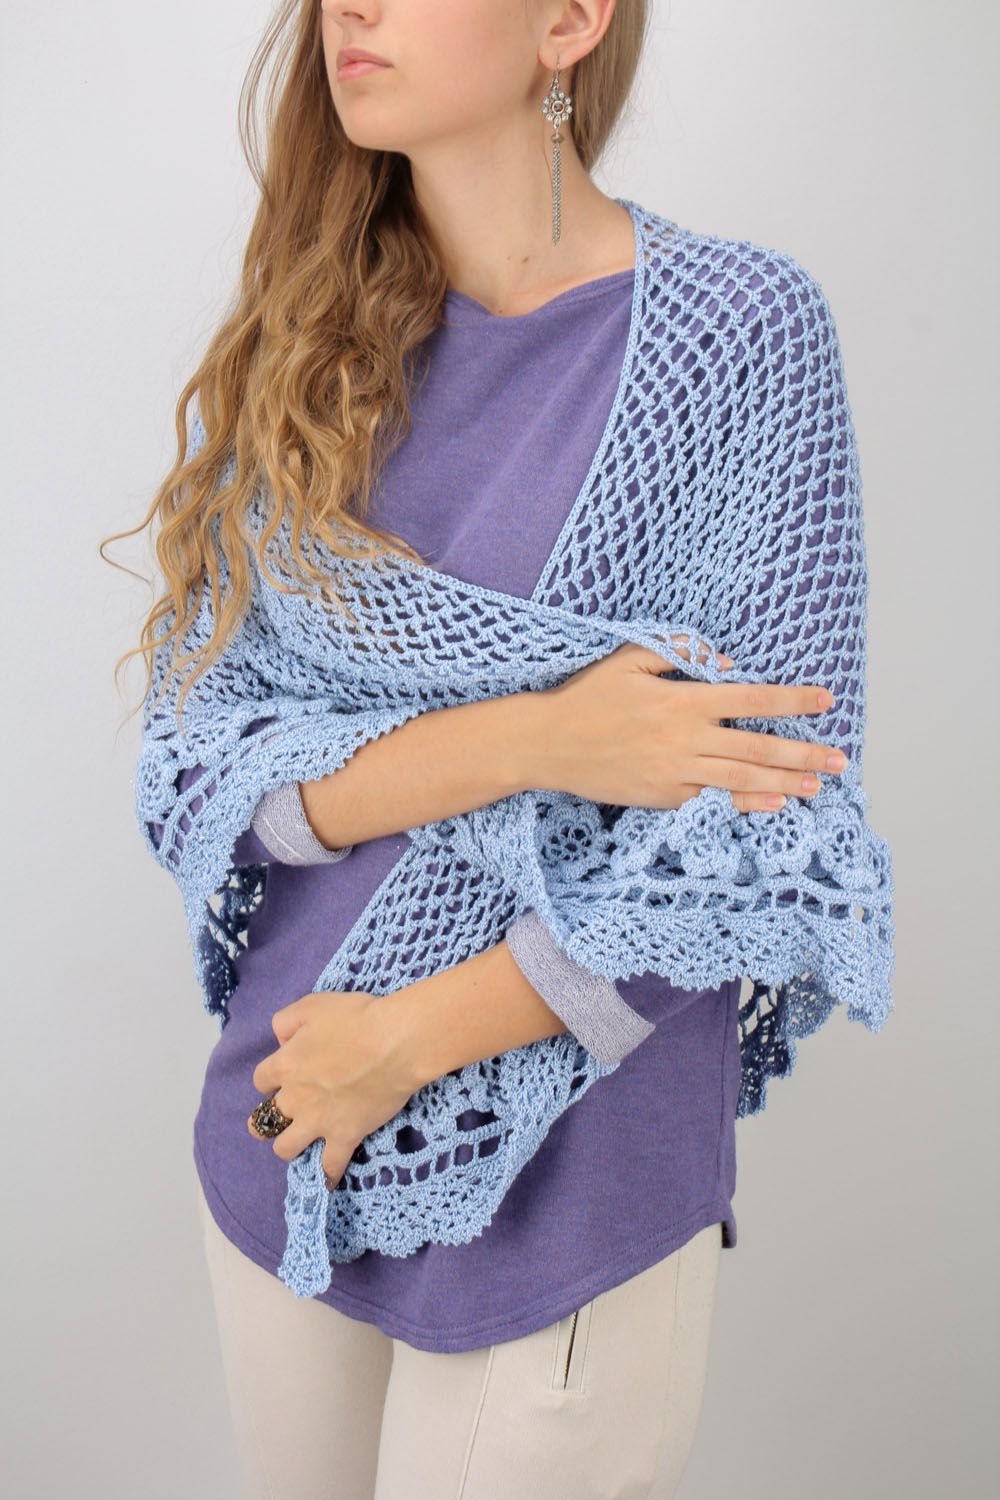 Crochet blue shawl photo 1